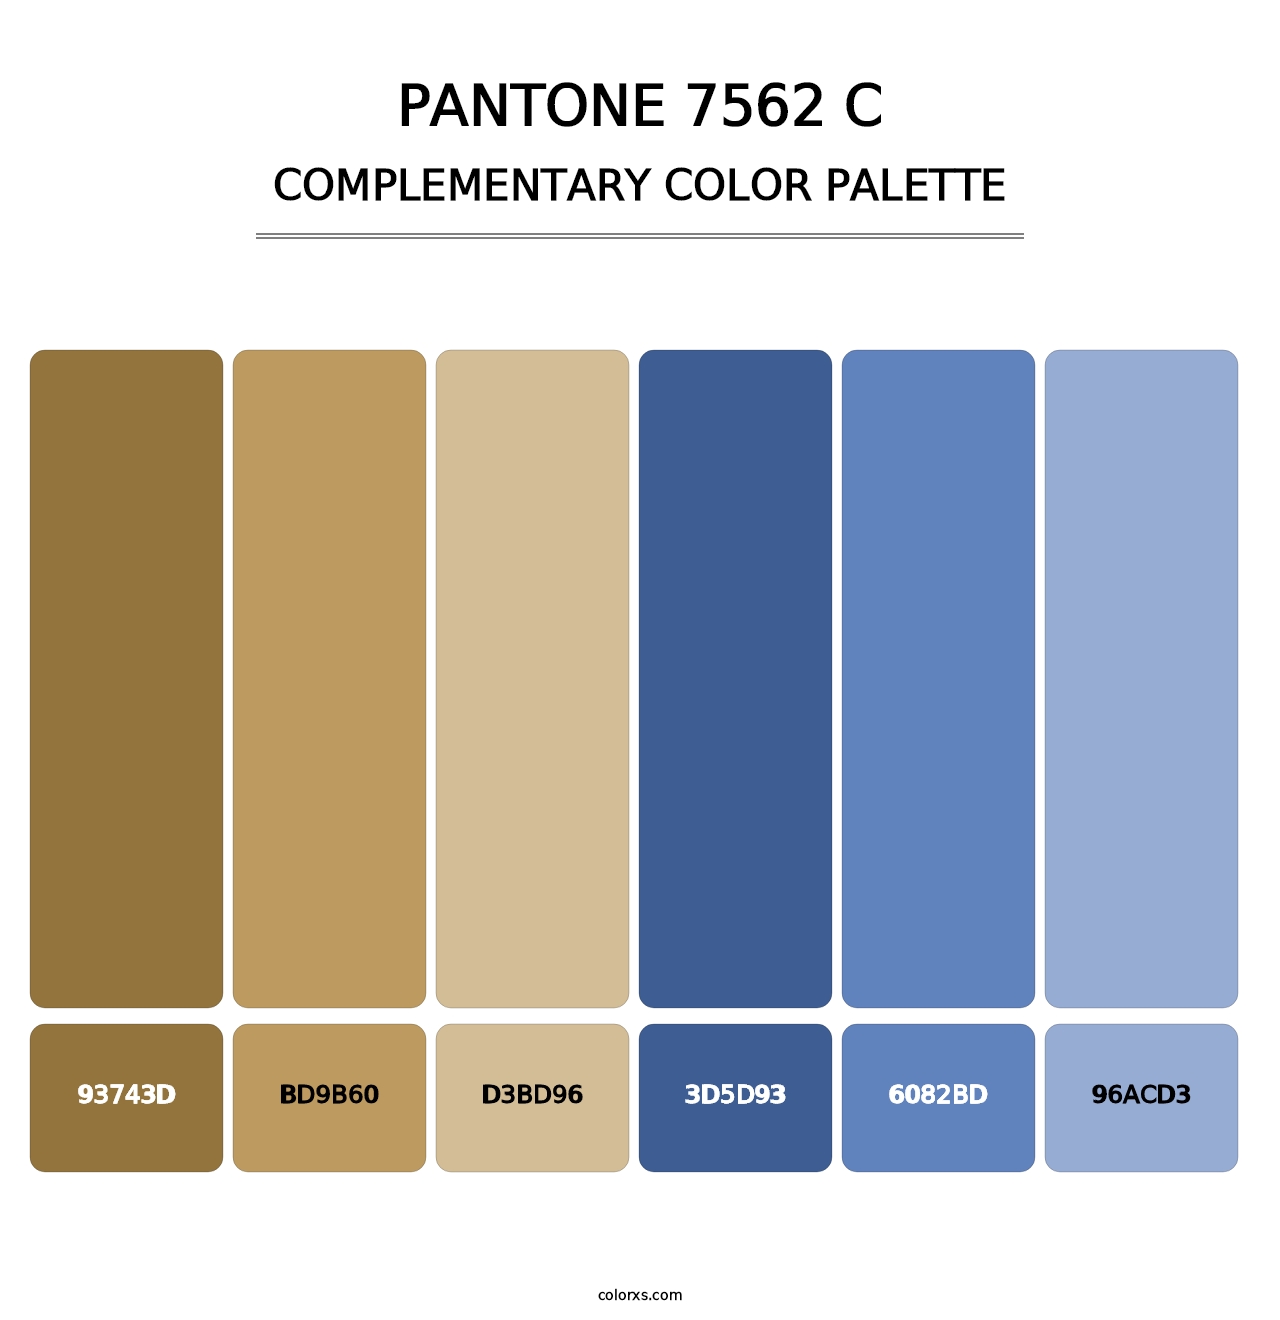 PANTONE 7562 C - Complementary Color Palette